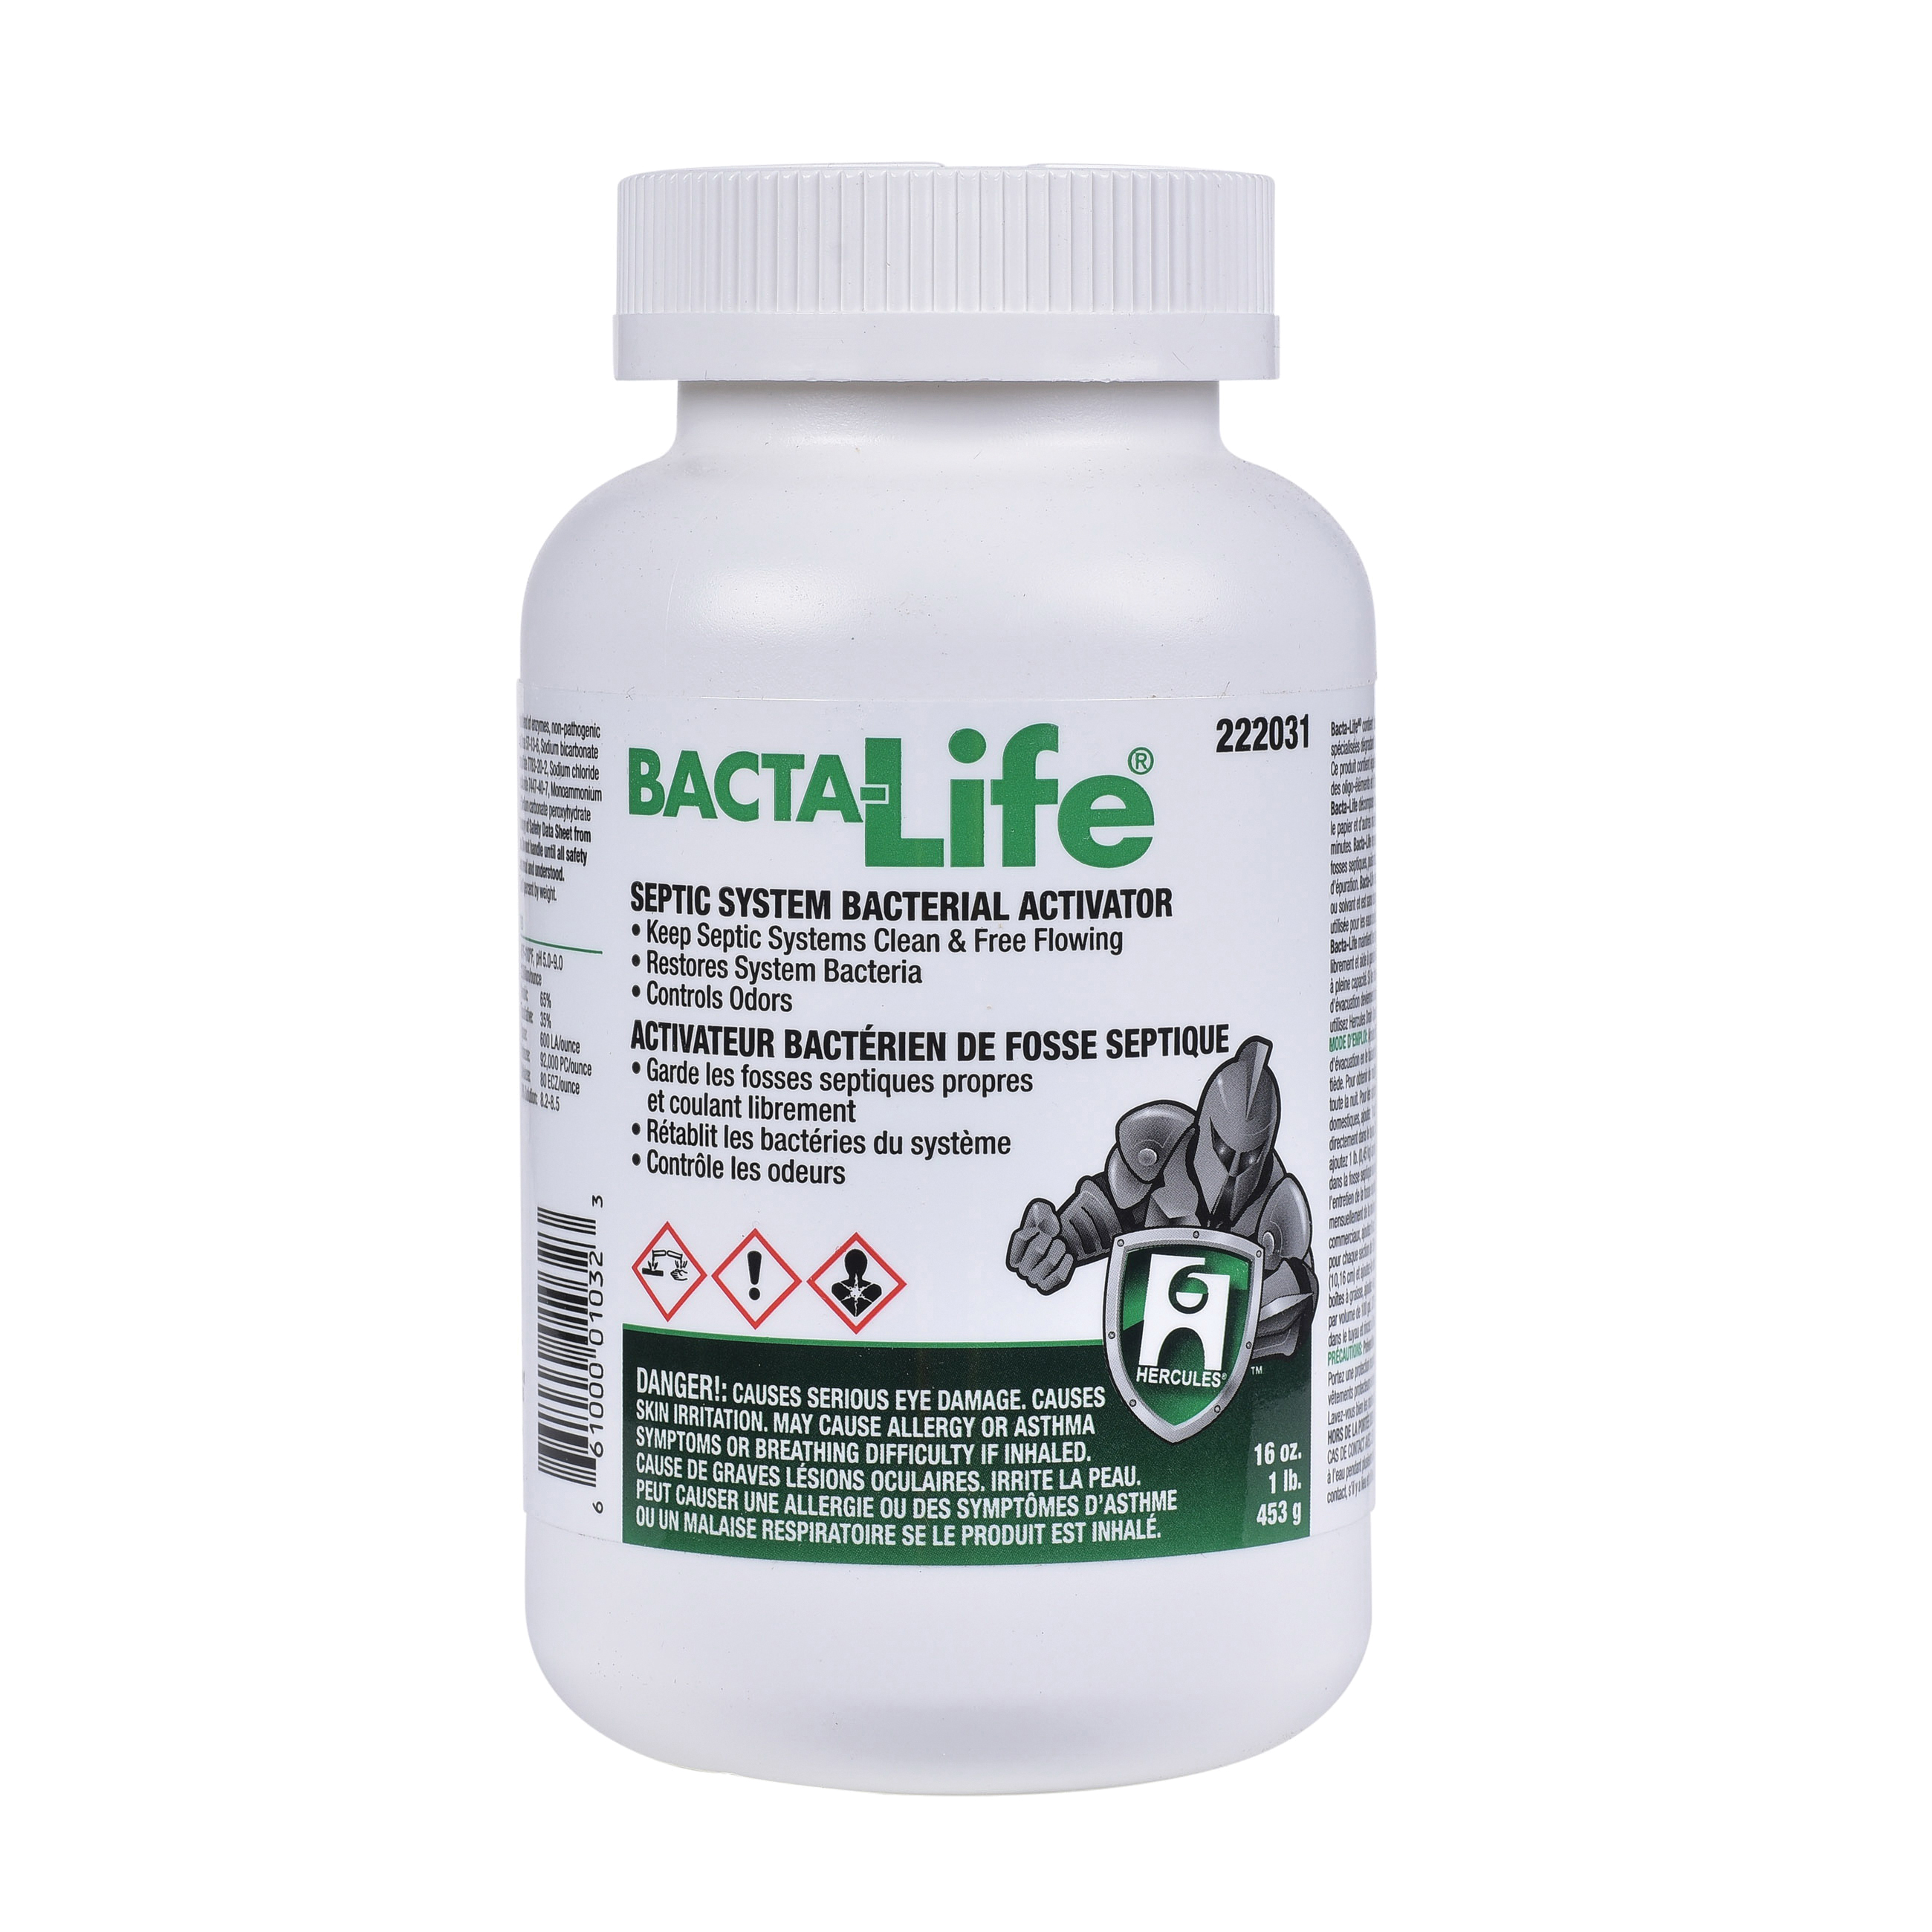 Hercules® Bacta-Life® 222031 Drain Opener, 1 lb, Tan, Solid/Powder Form